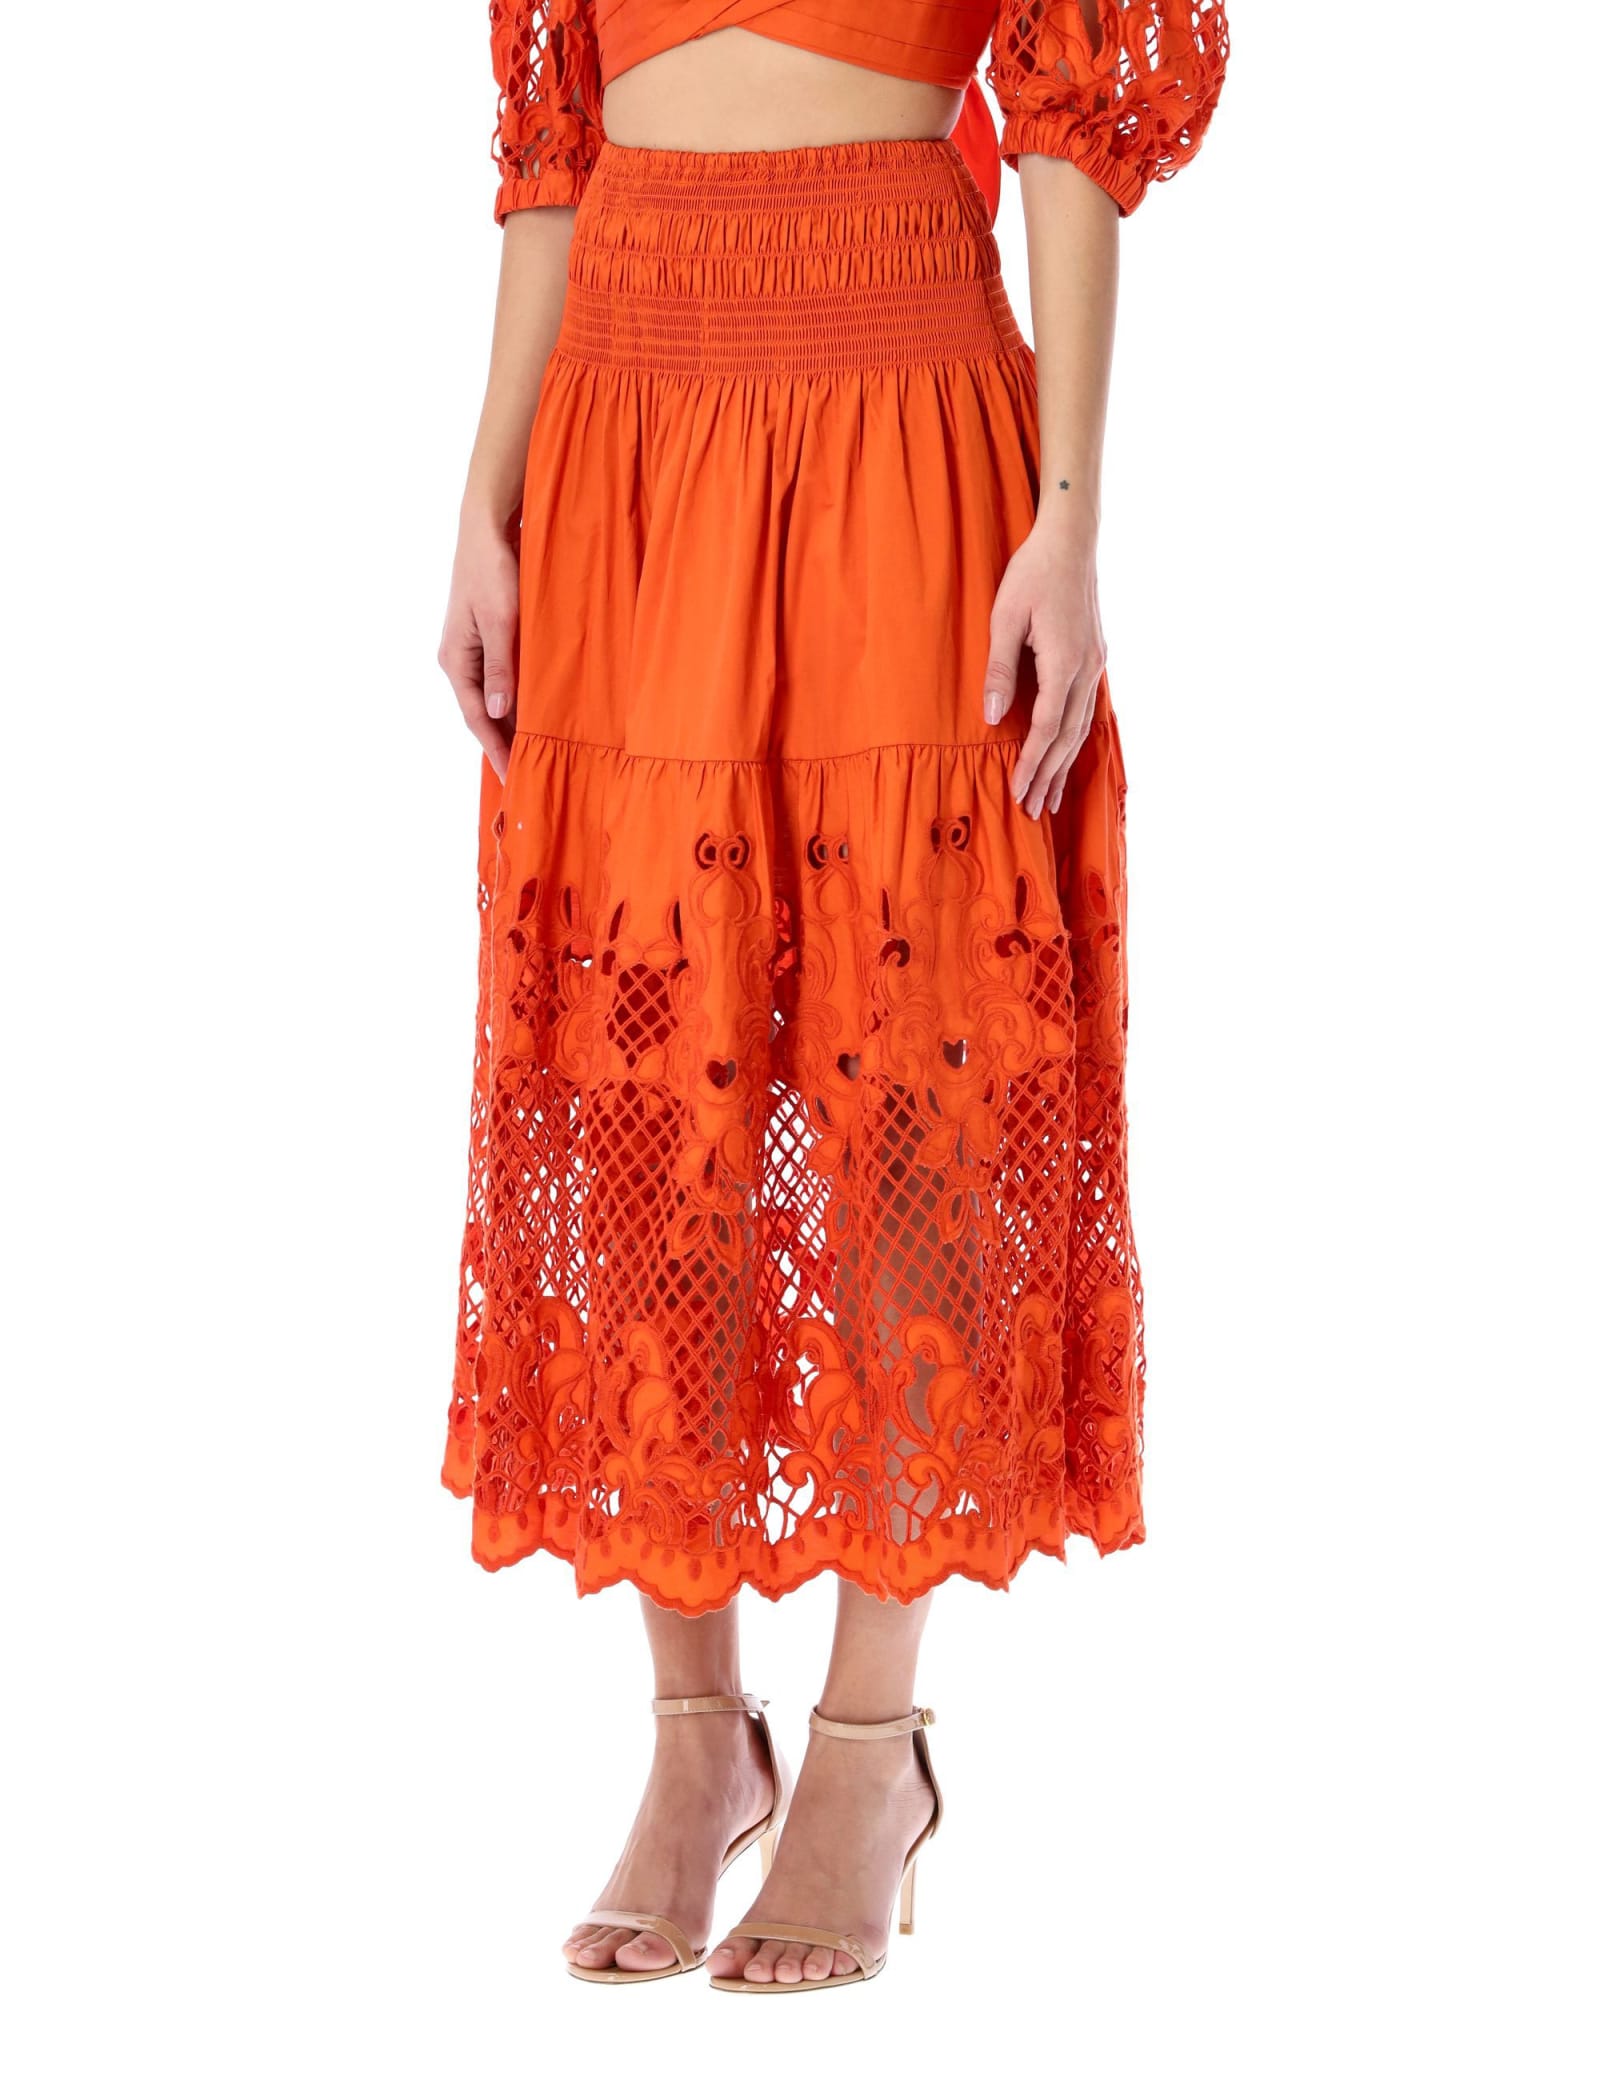 embroidered skirt orange